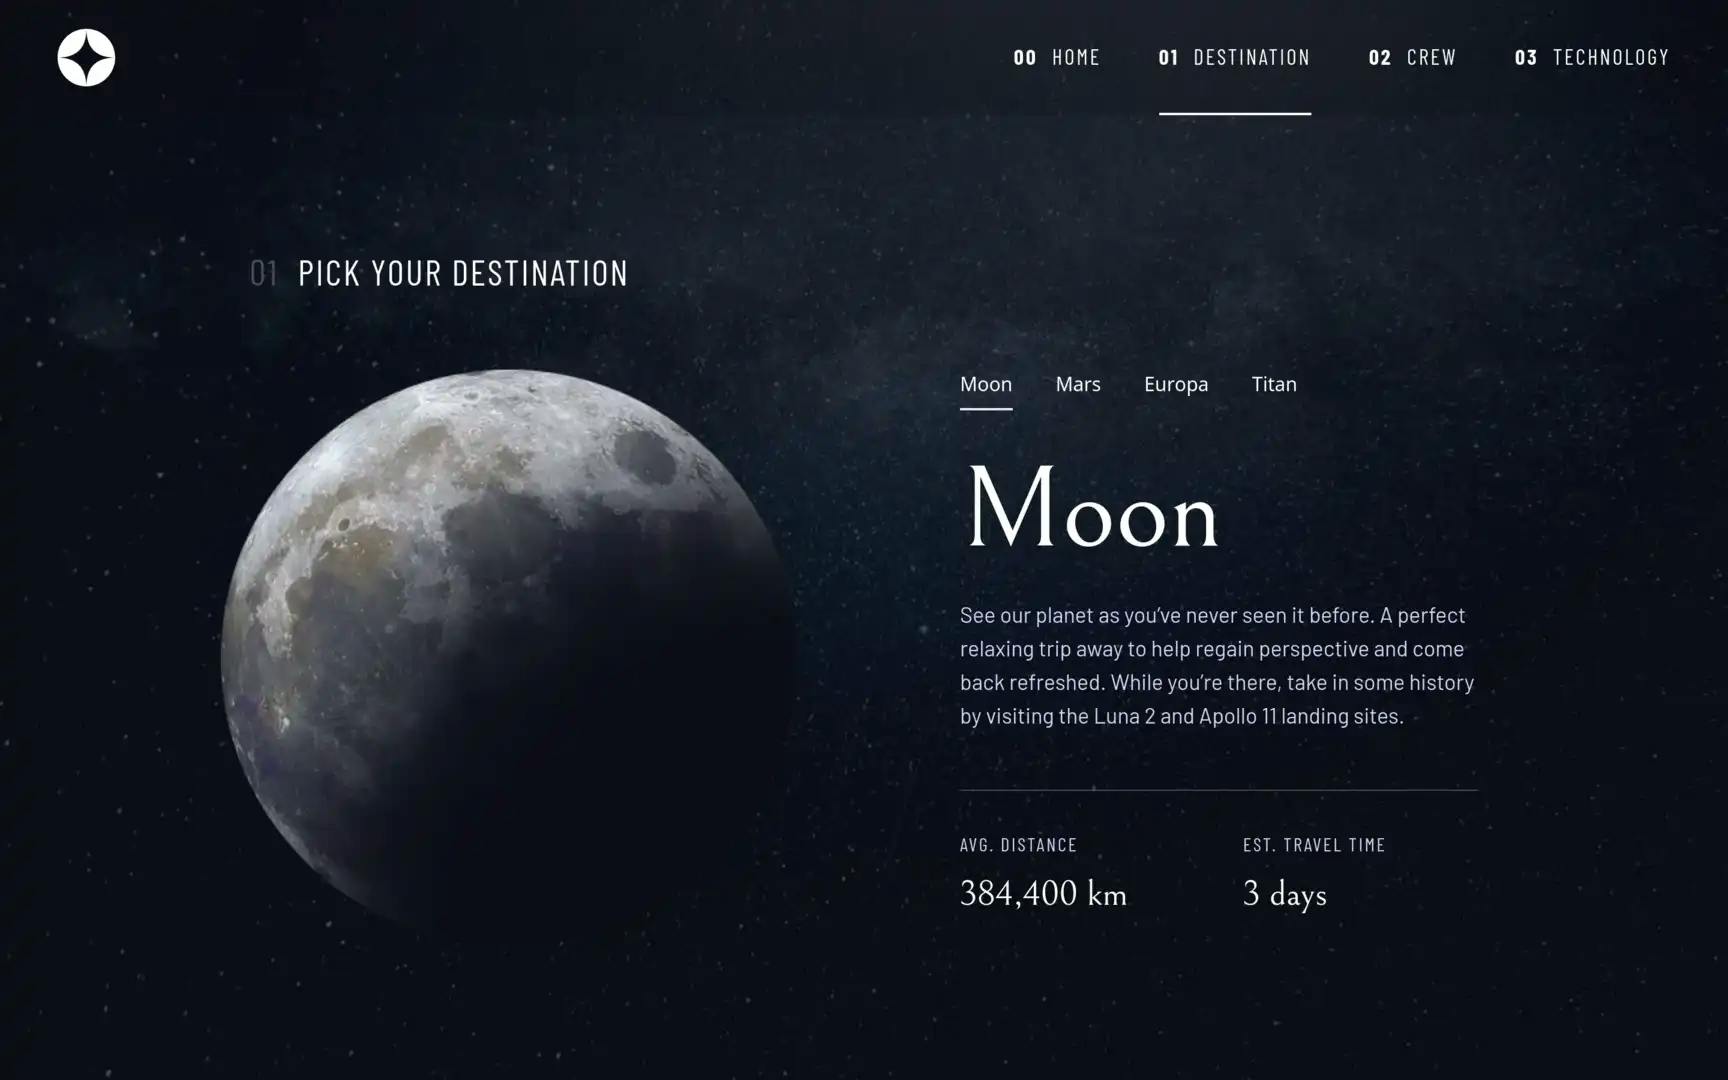 screenshot of space website destination page